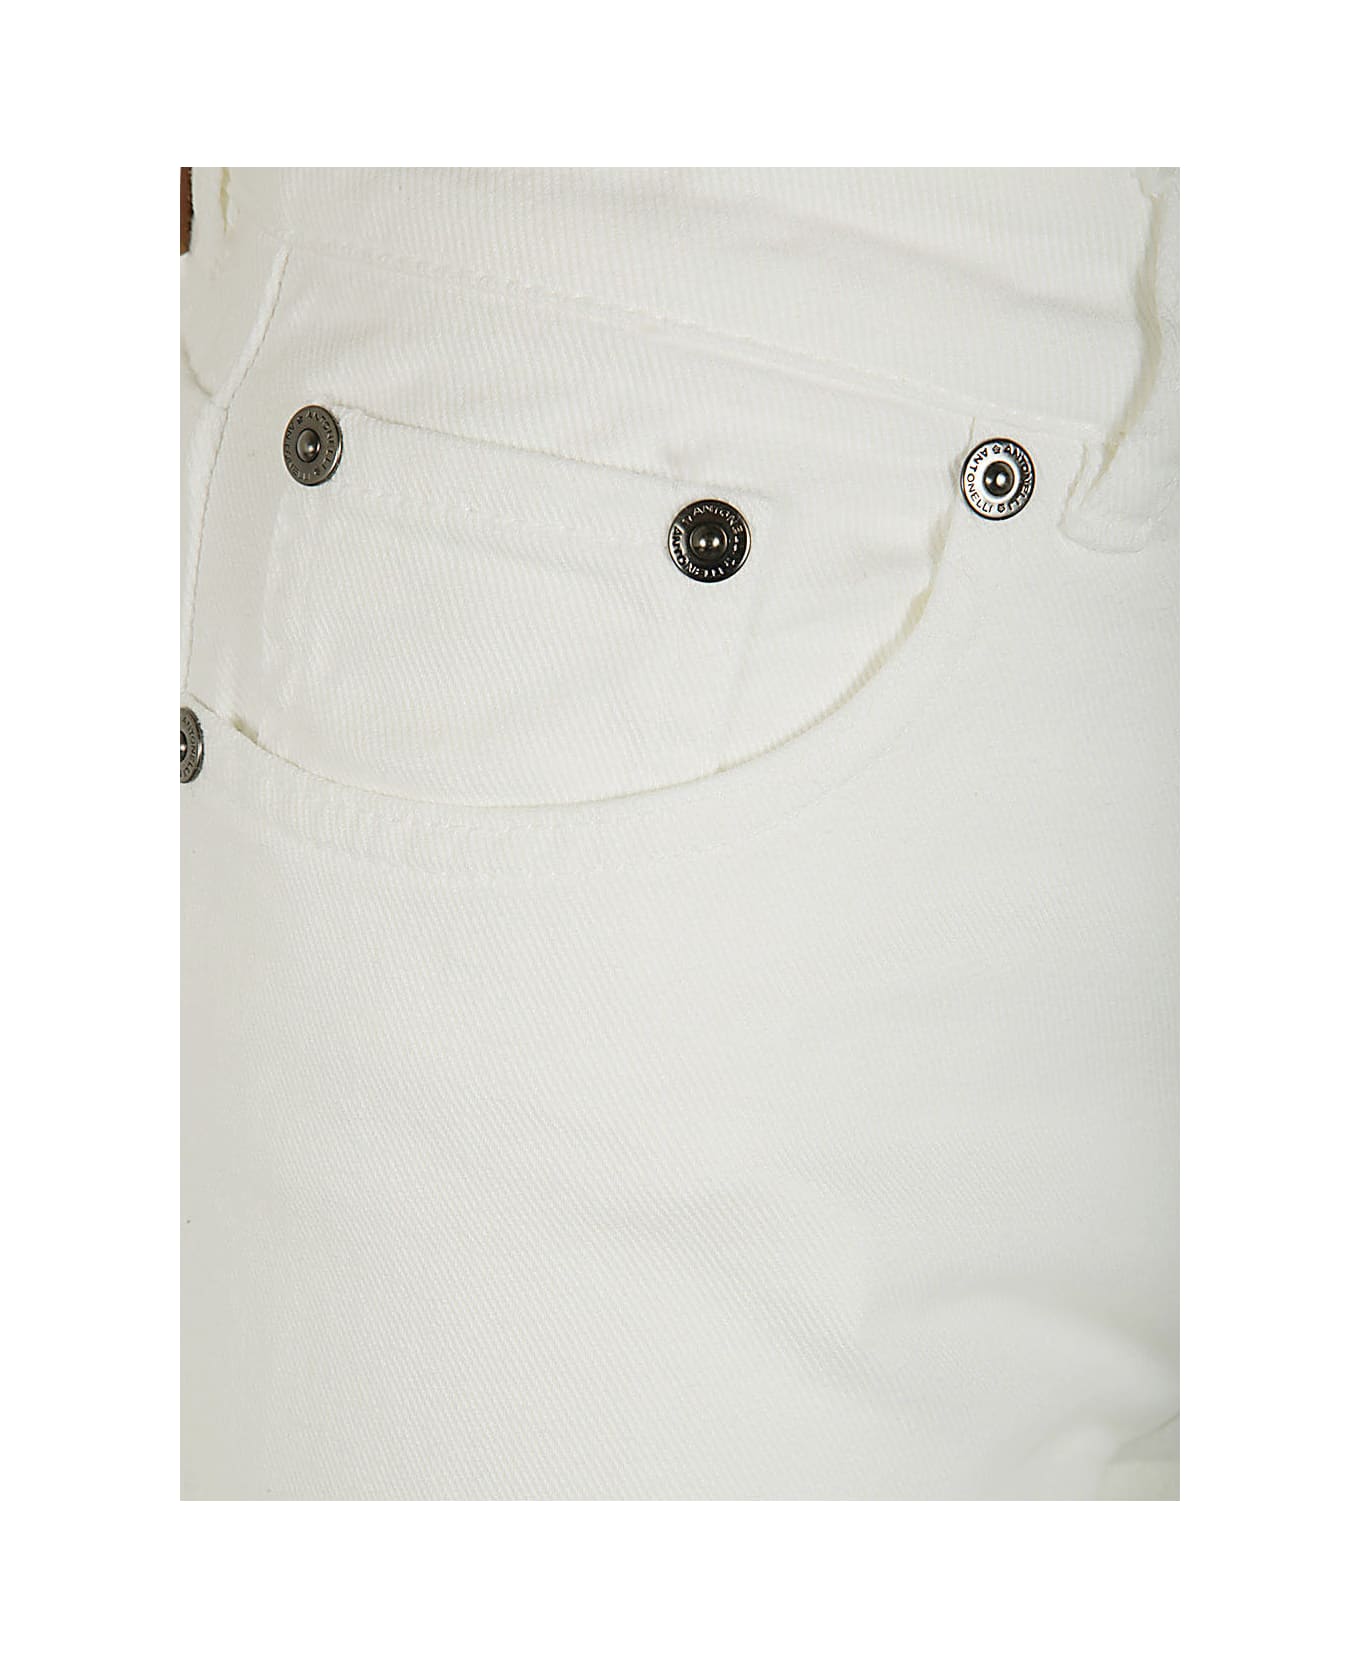 Antonelli Salvatore Jeans With Fringes - White